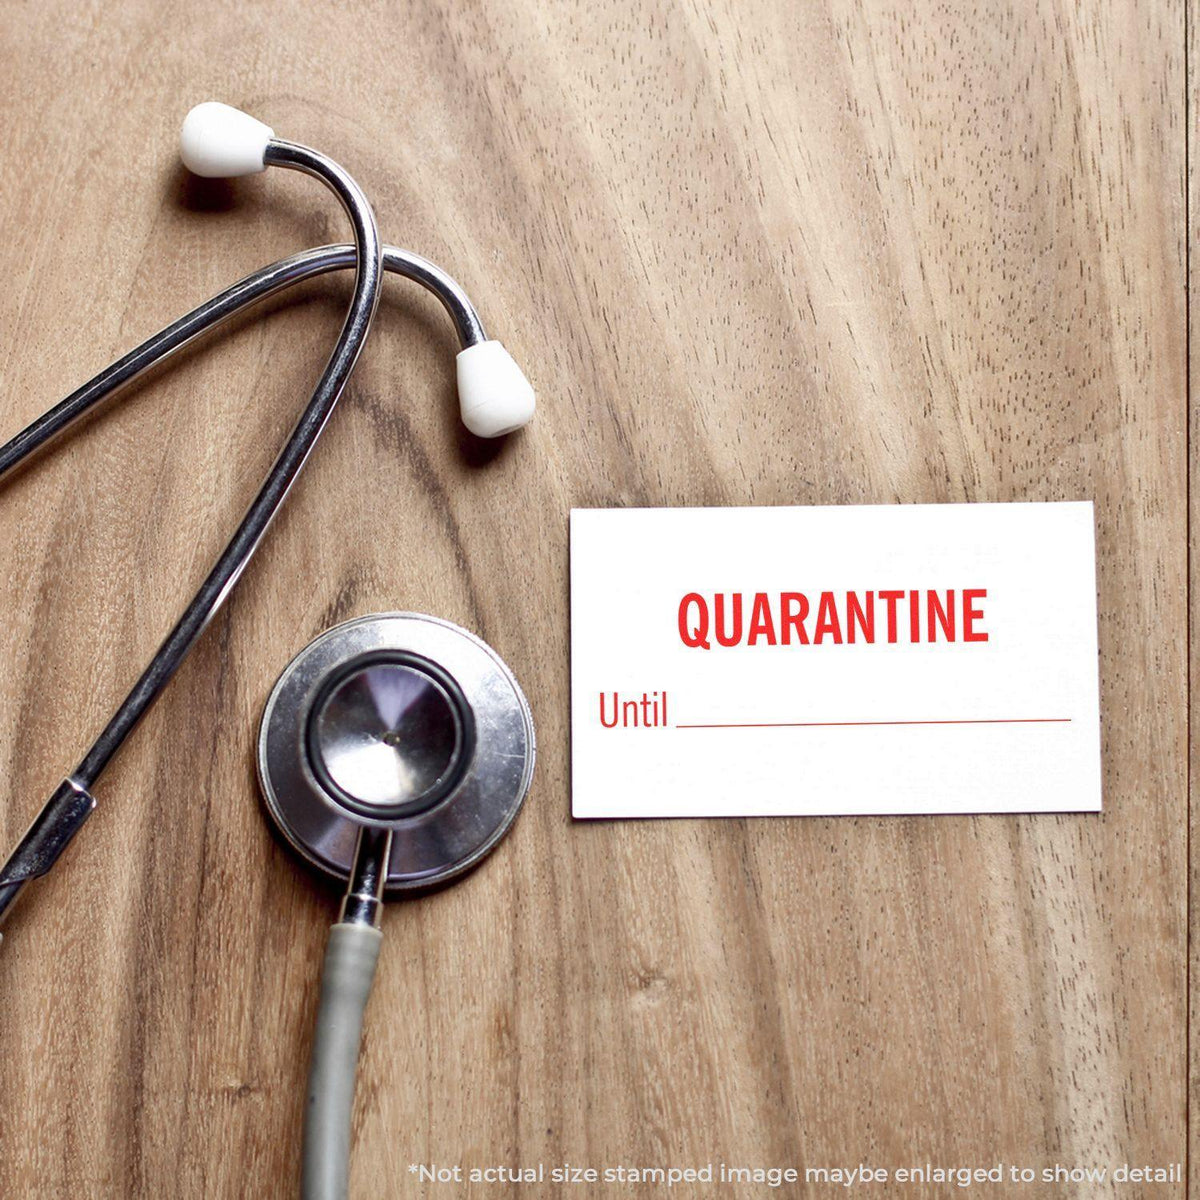 In Use Large Quarantine Until Rubber Stamp Image